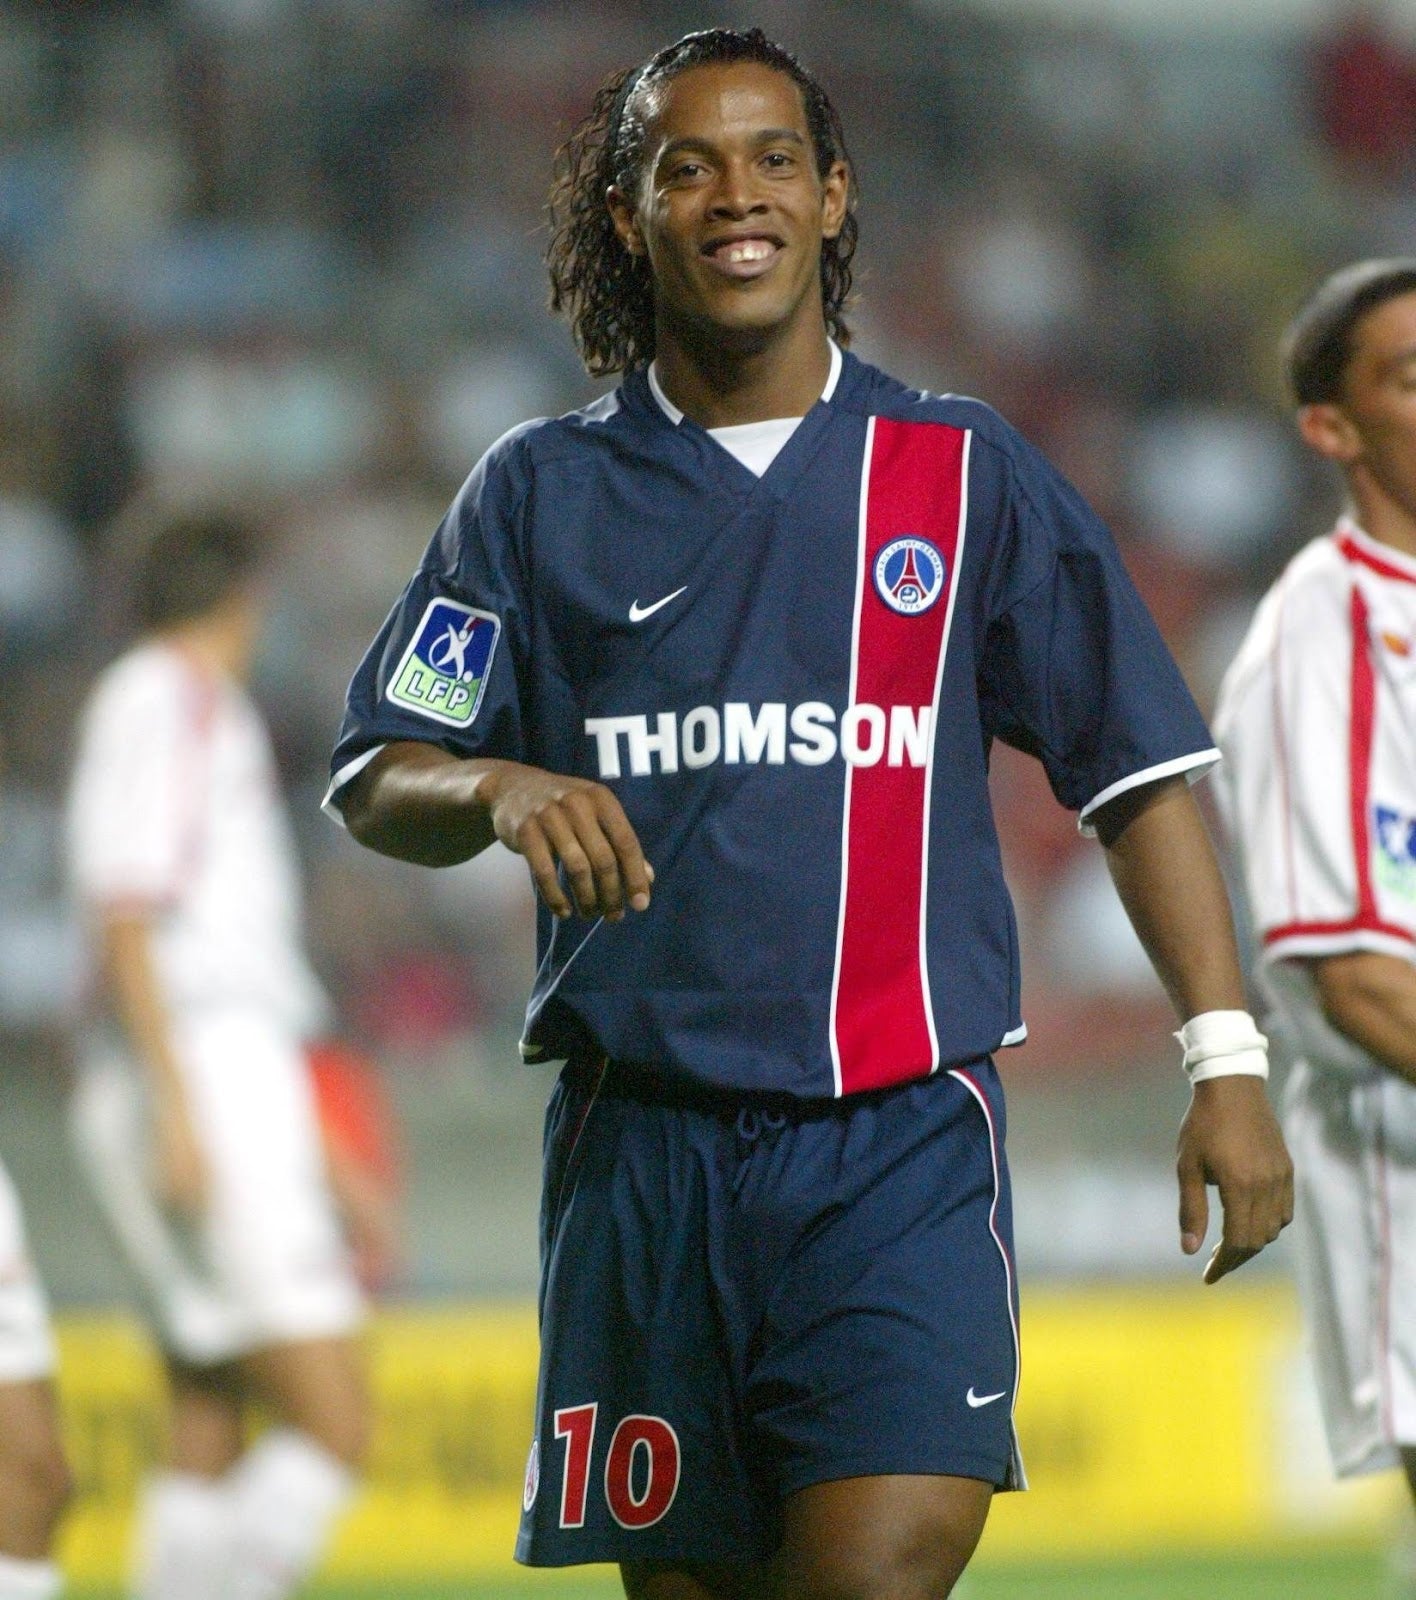 Ronaldinho Paris Saint-Germain 2002/03 Season Home Kit Iconic Classic Authentic Nike On-Field PSG Retro Jersey - Navy Blue